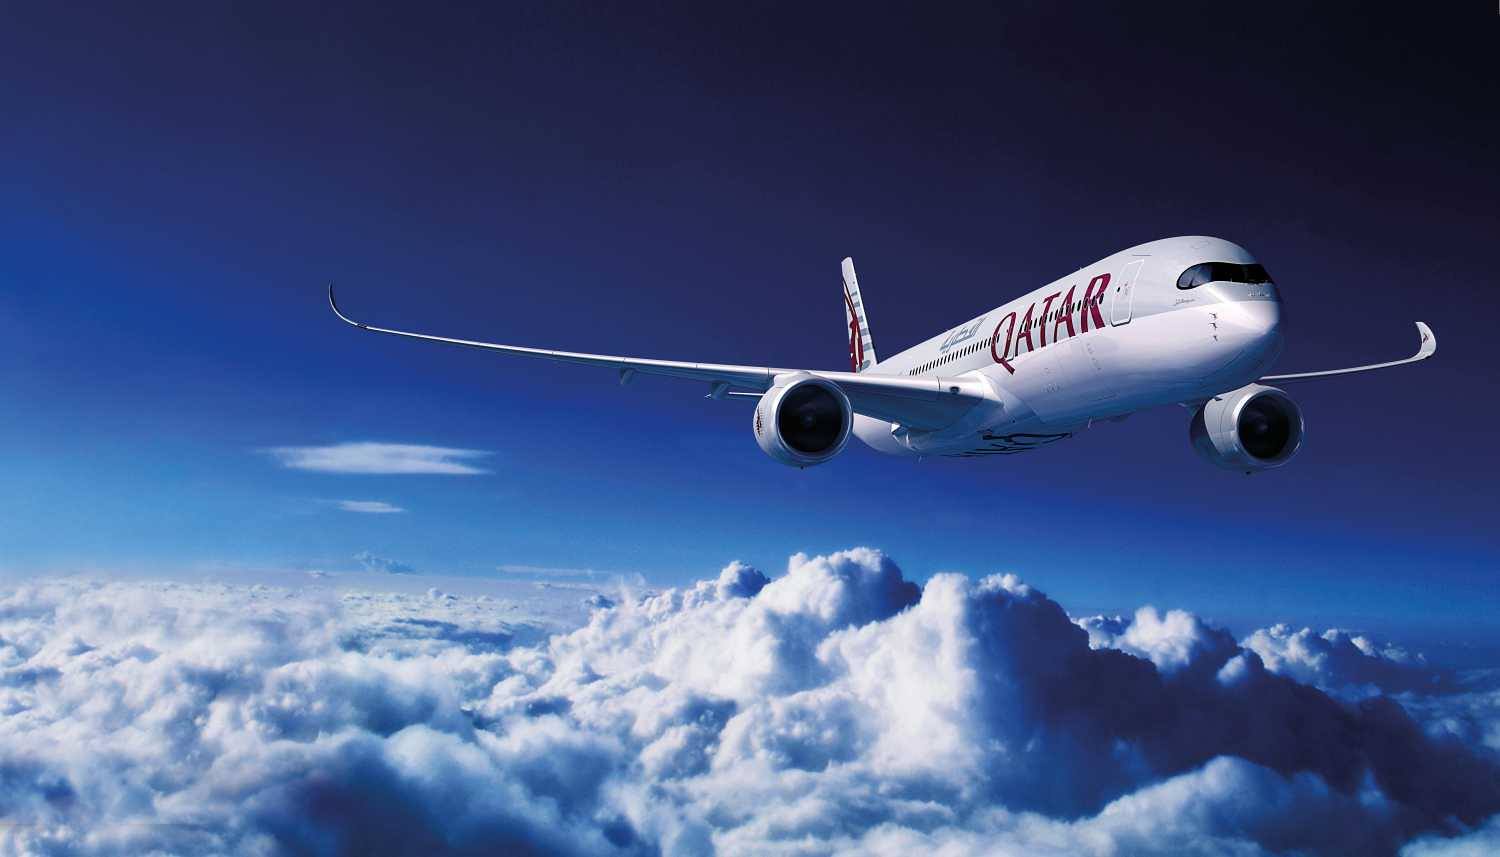 Qatar Airways operates above 15,000 flights to take 1.8 million people home